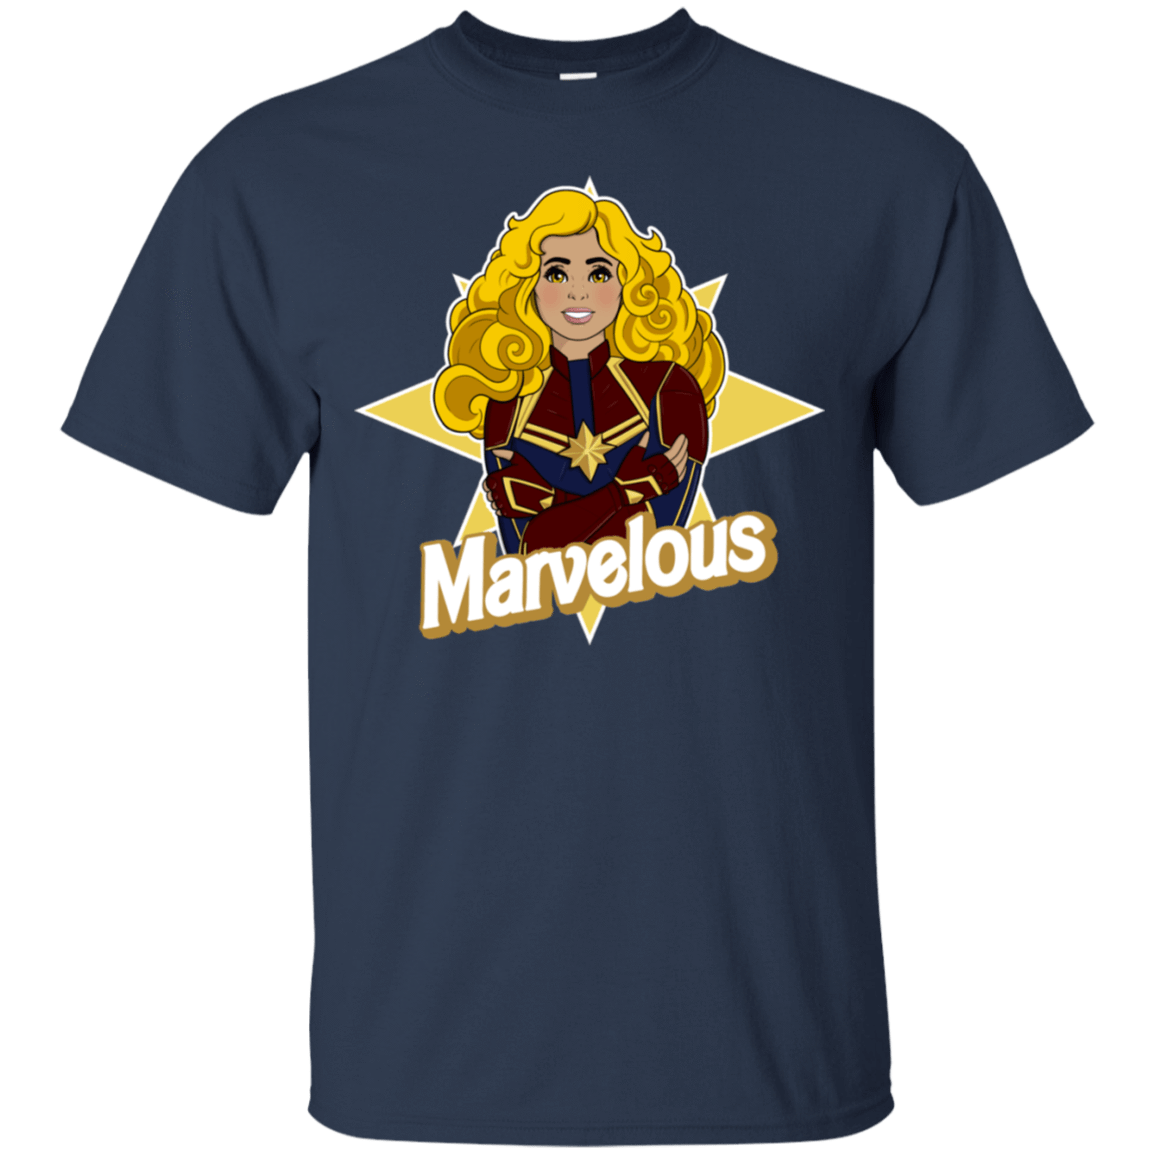 T-Shirts Navy / S Marvelous T-Shirt